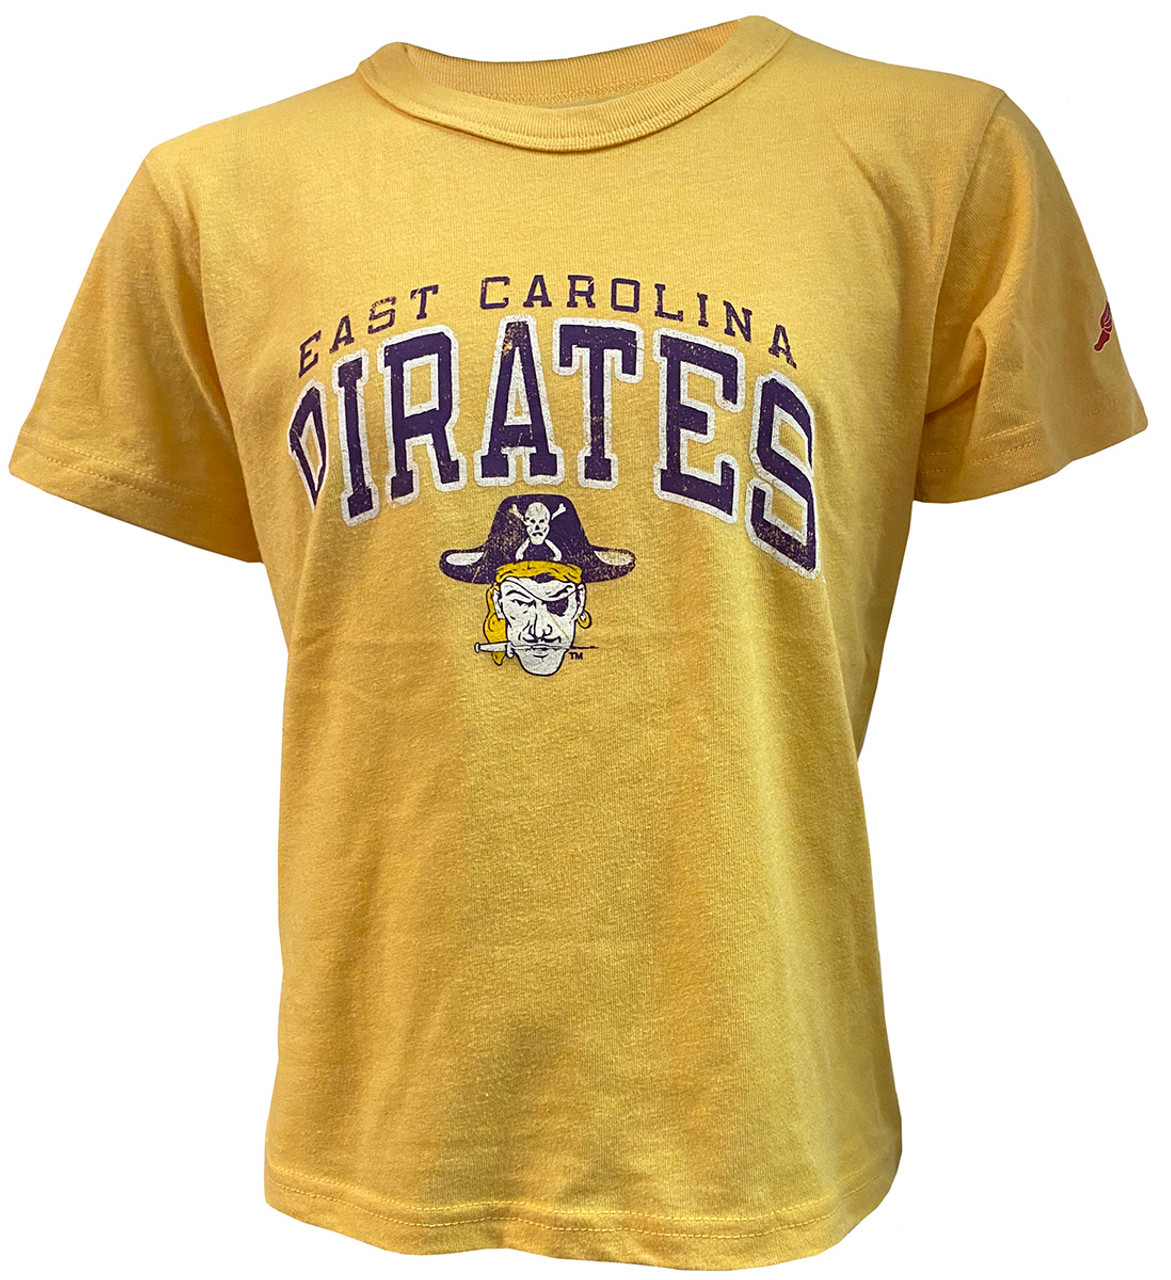 East Carolina Gifts & Apparel, ECU Pirates Football Gear, East